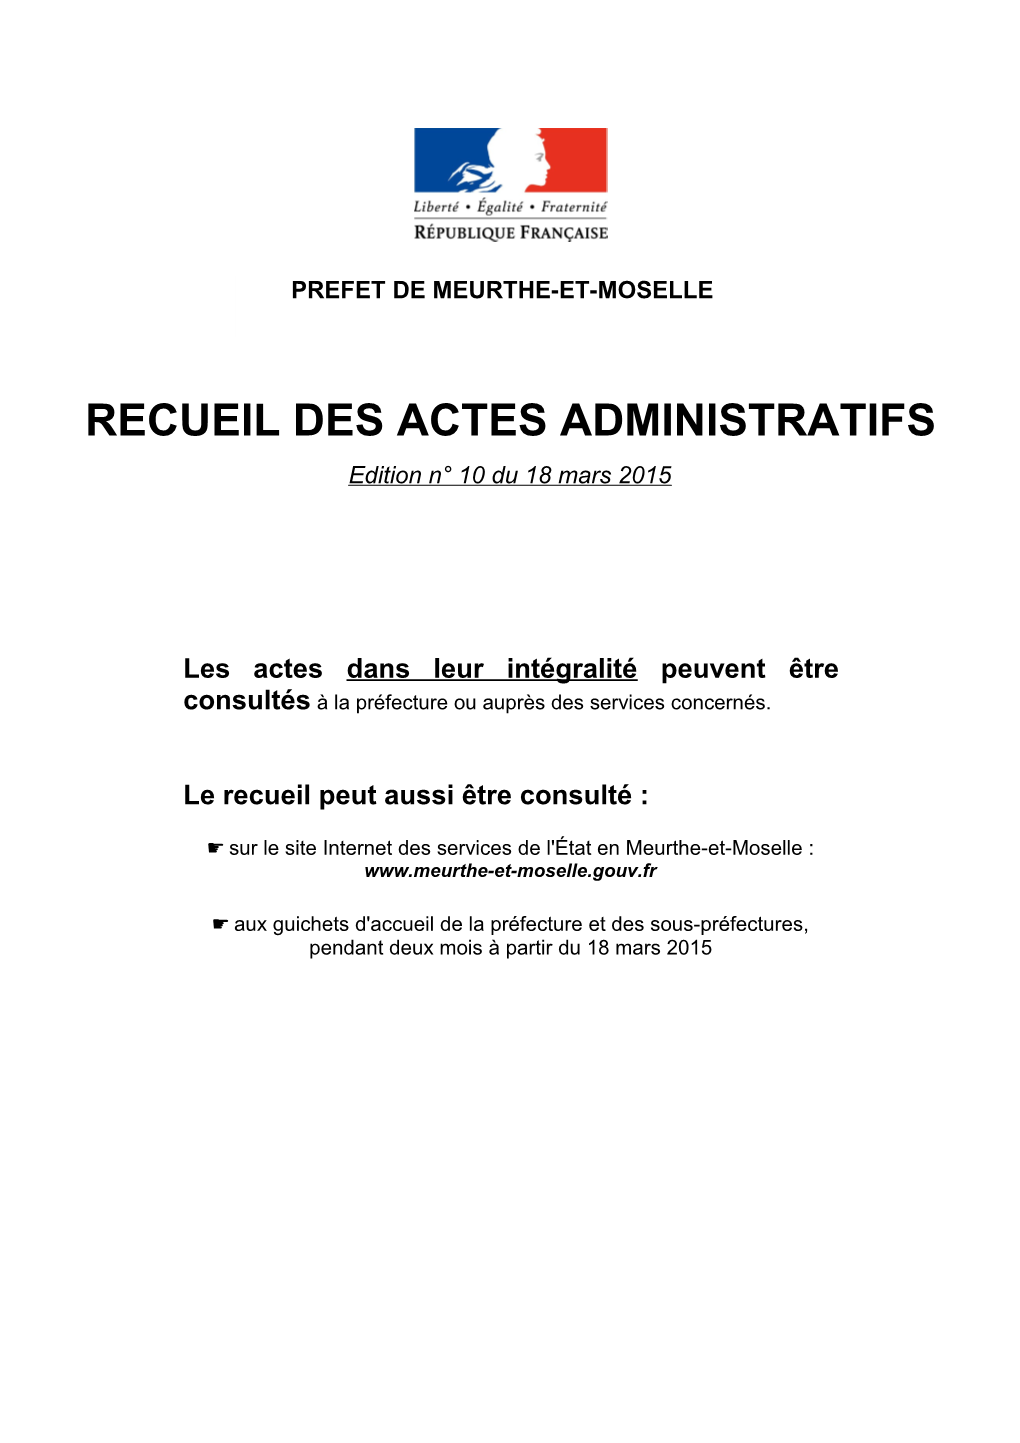 RECUEIL DES ACTES ADMINISTRATIFS Edition N° 10 Du 18 Mars 2015